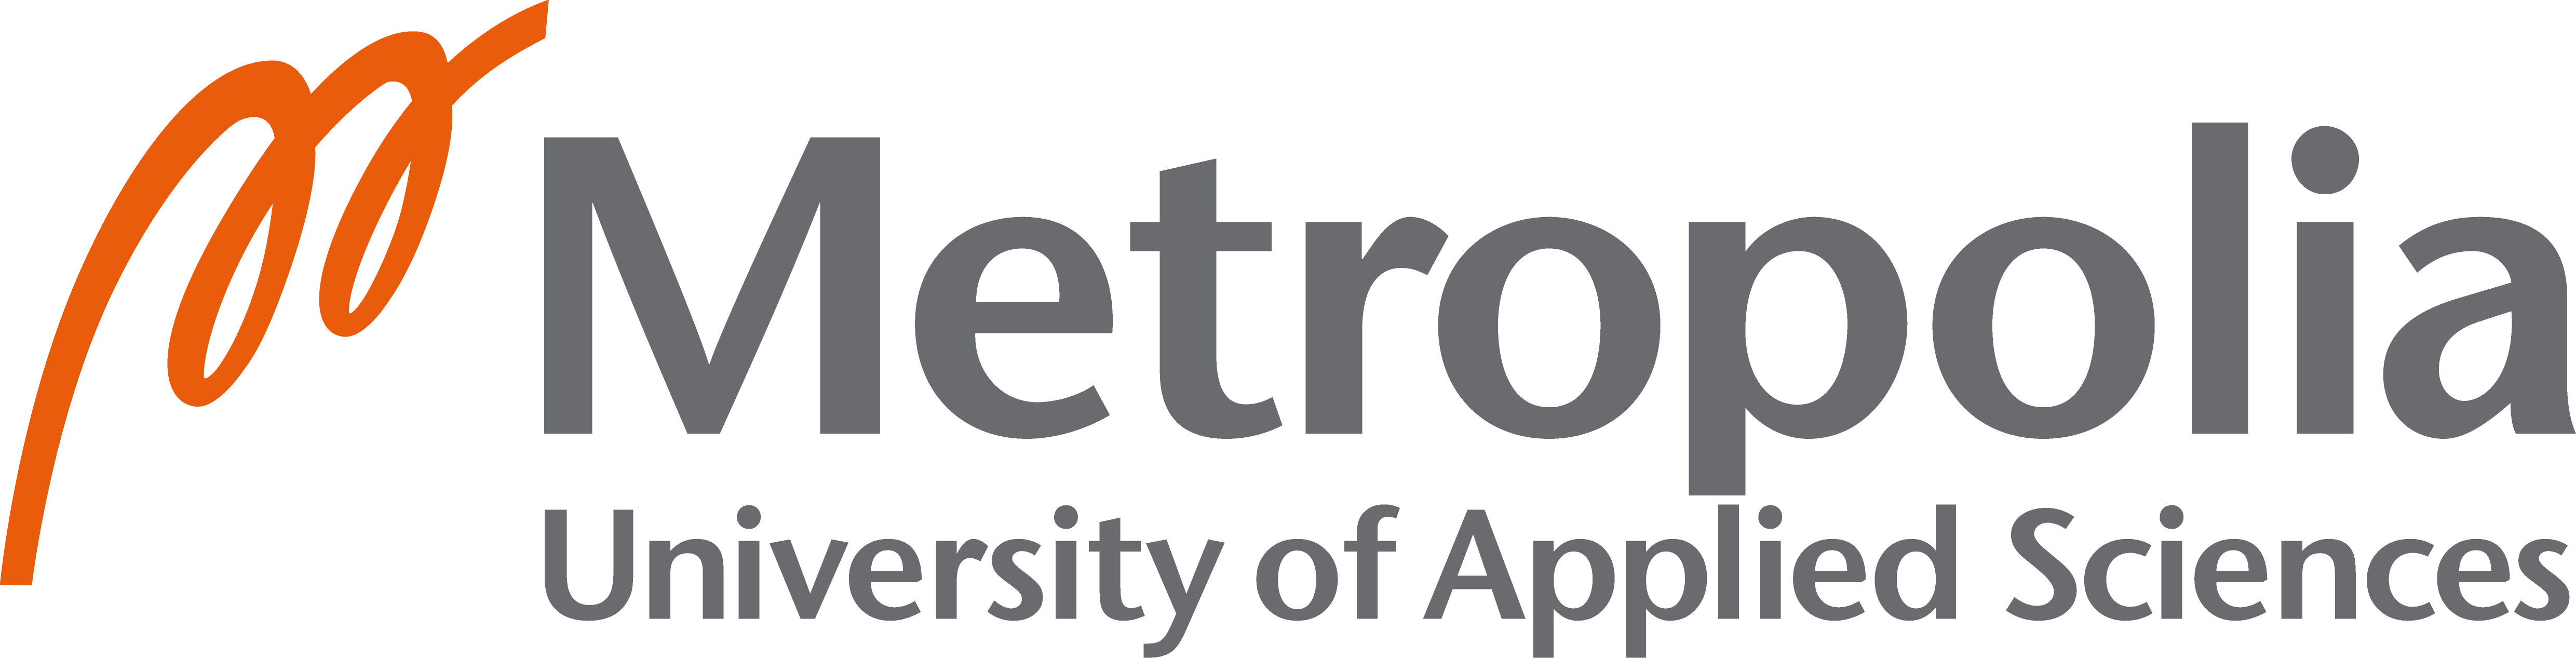 Metropolia UAS logo